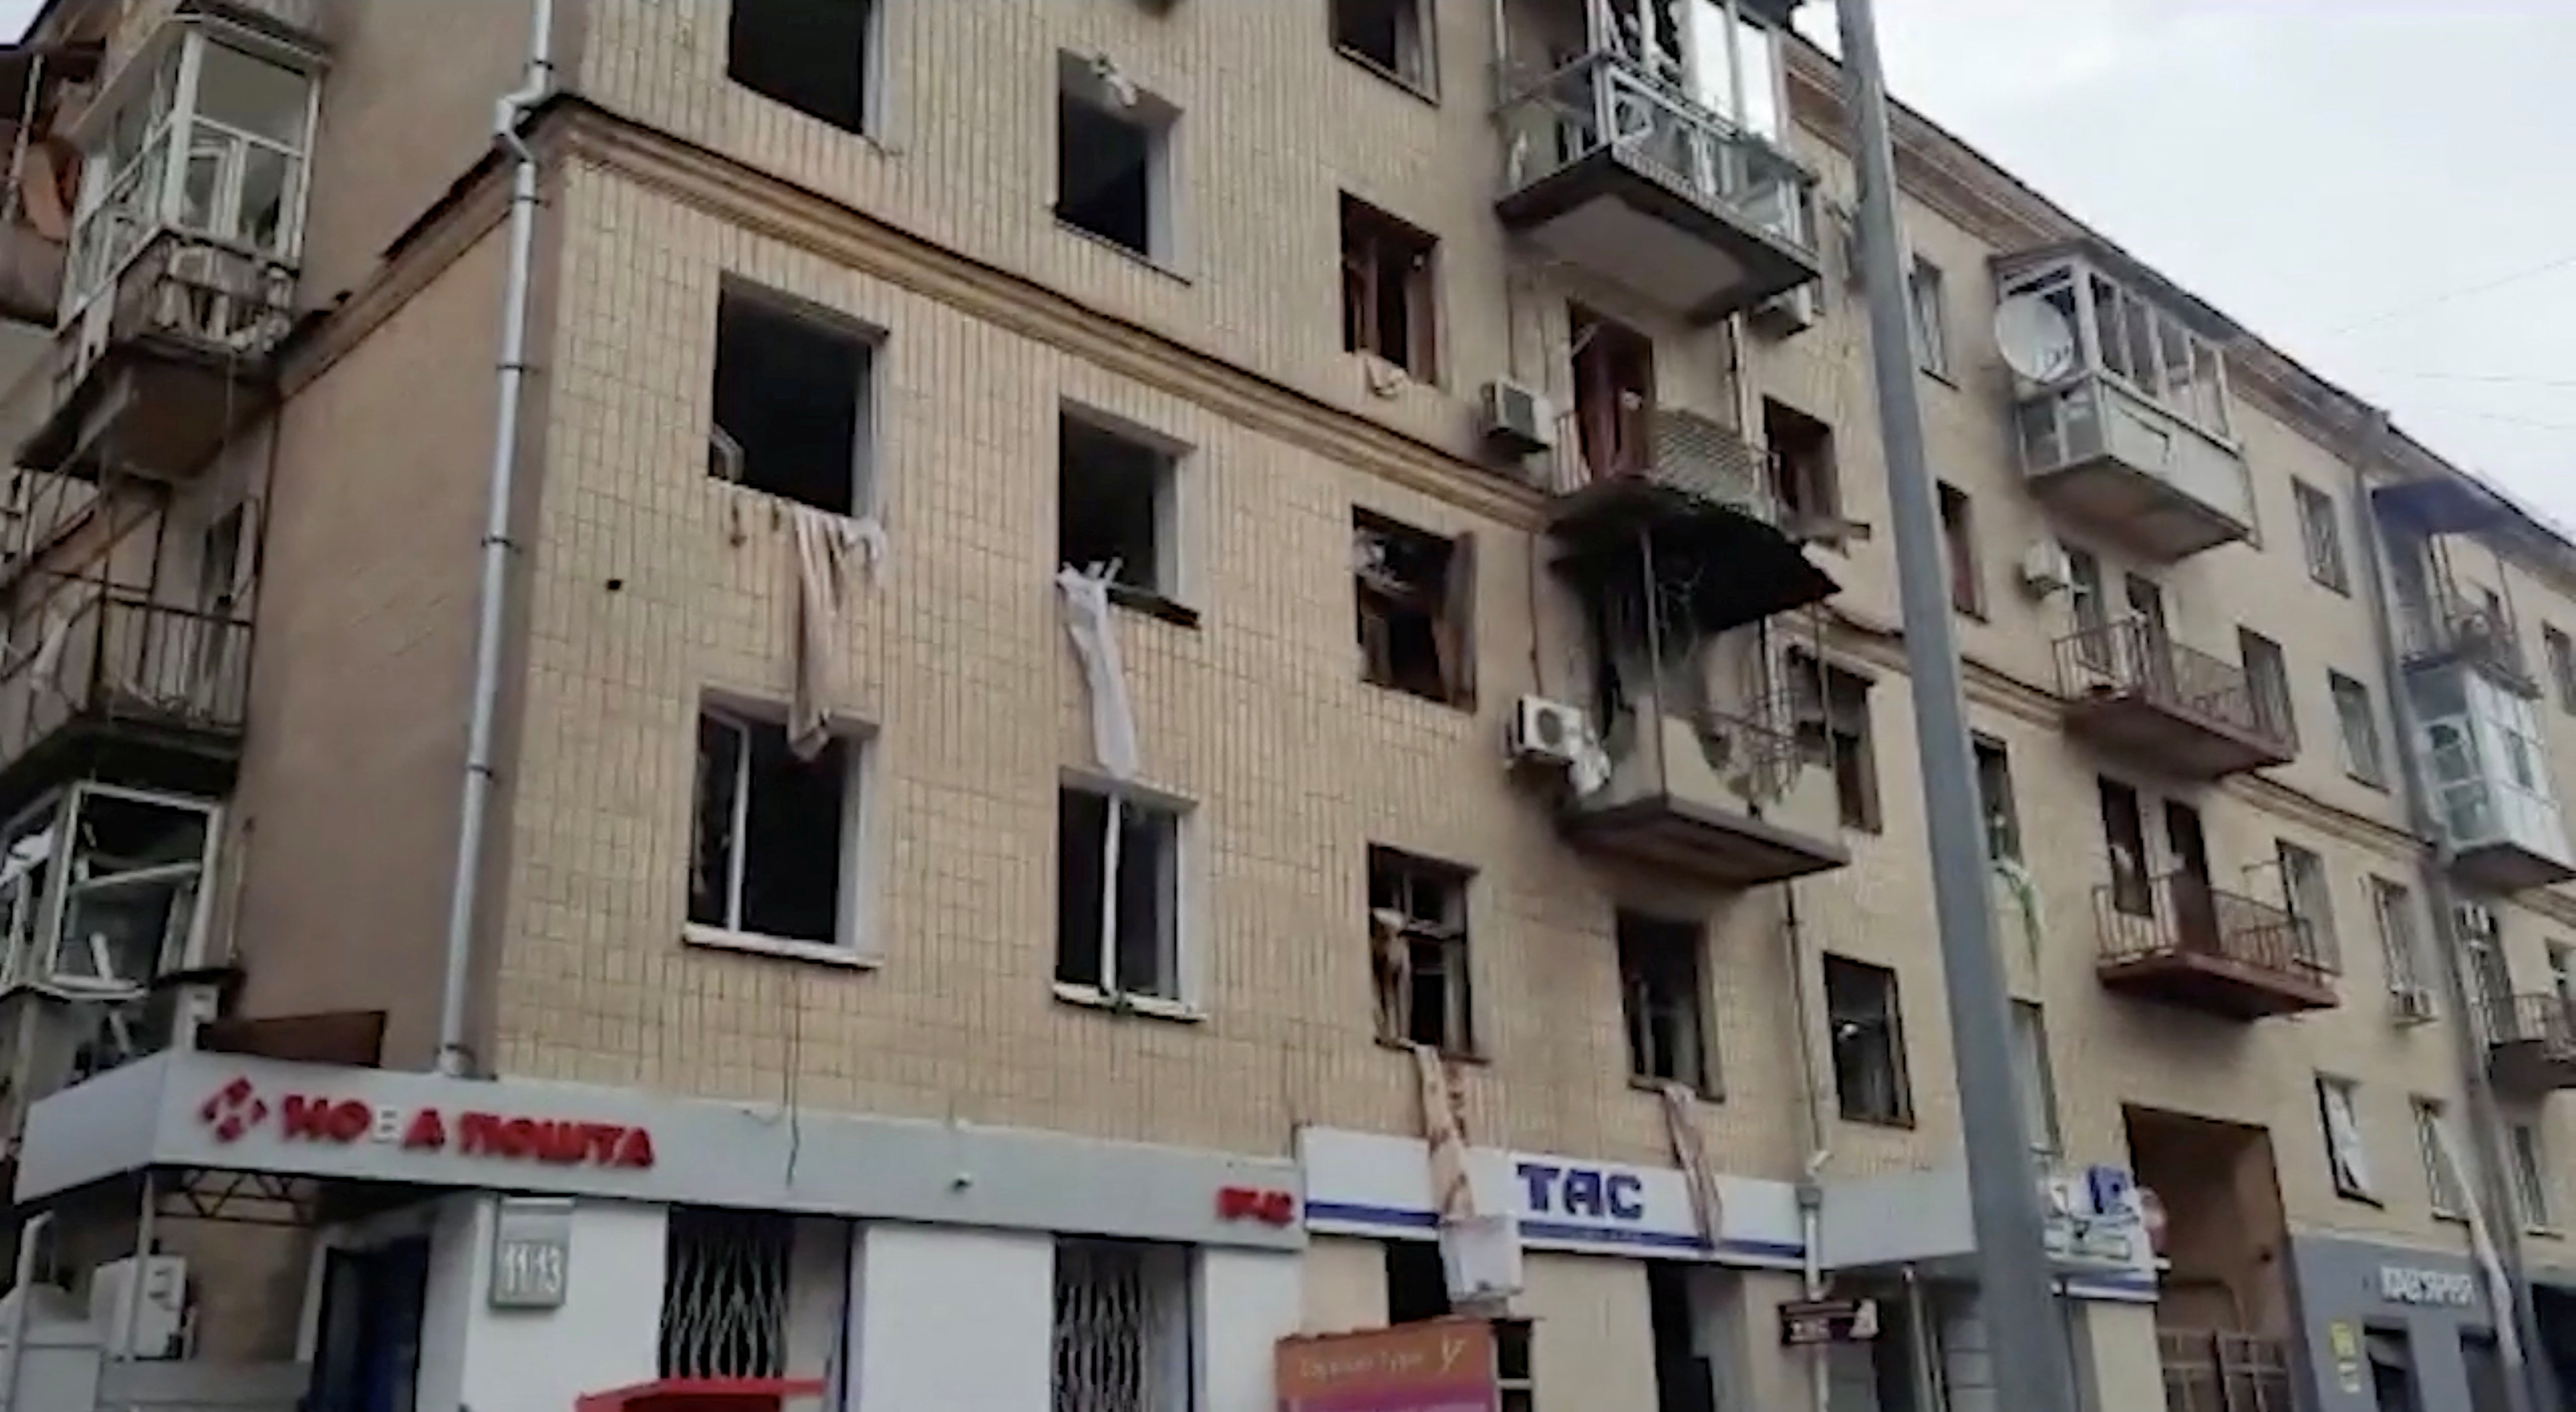 Kharkiv fire crews attend fire at damaged building in city